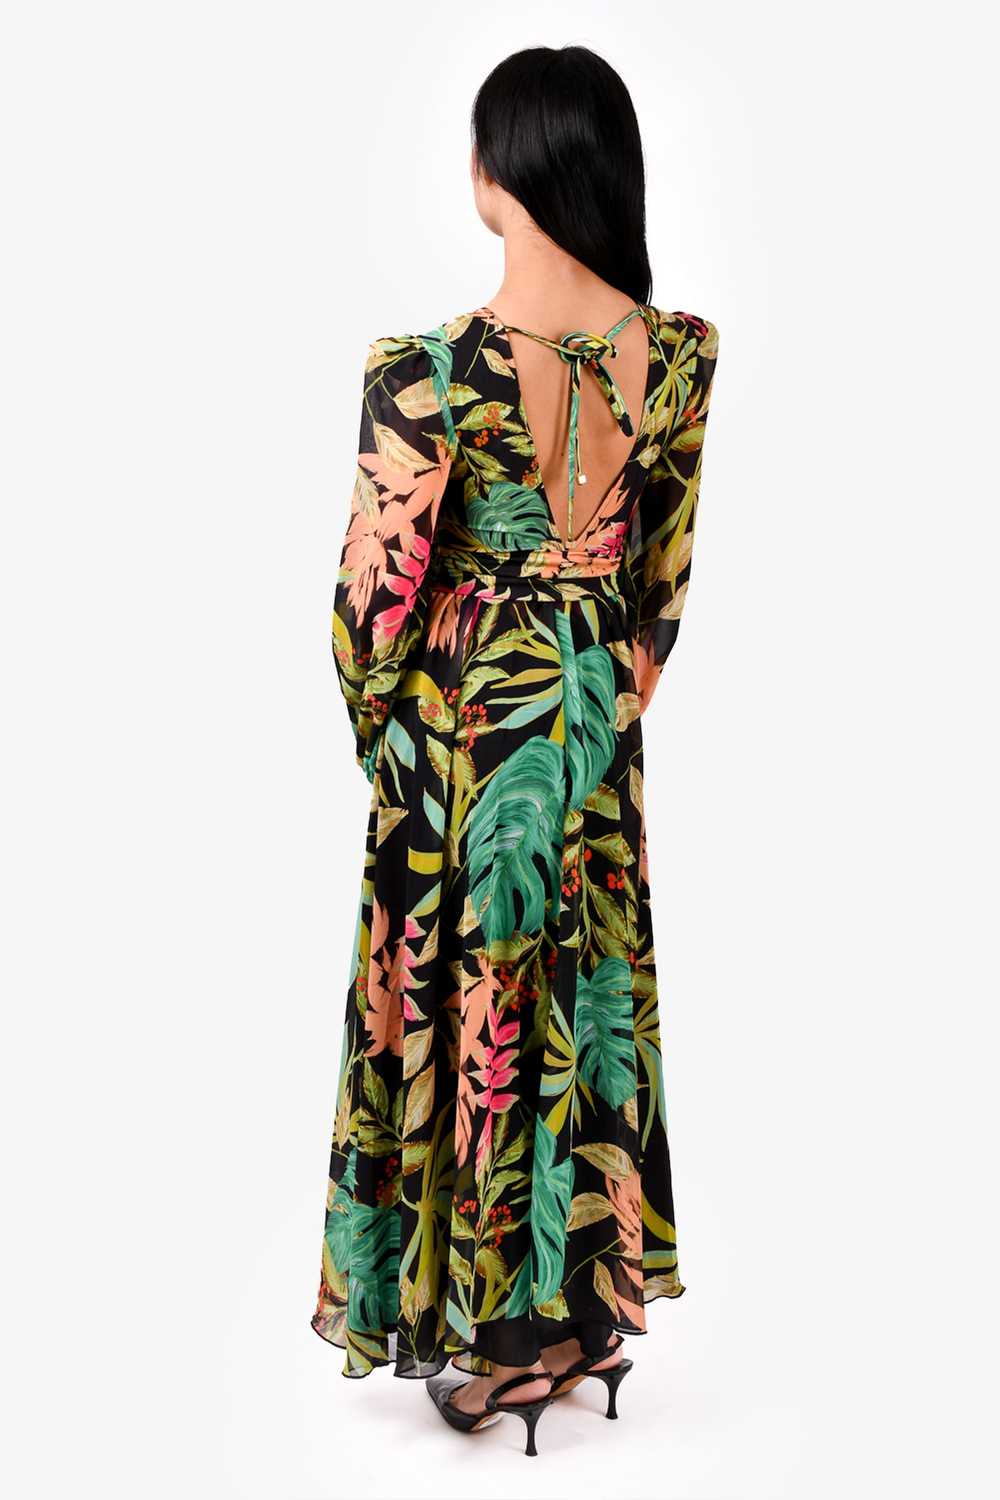 PatBO Black Tropicalia Plunge Maxi Dress Size S - image 2